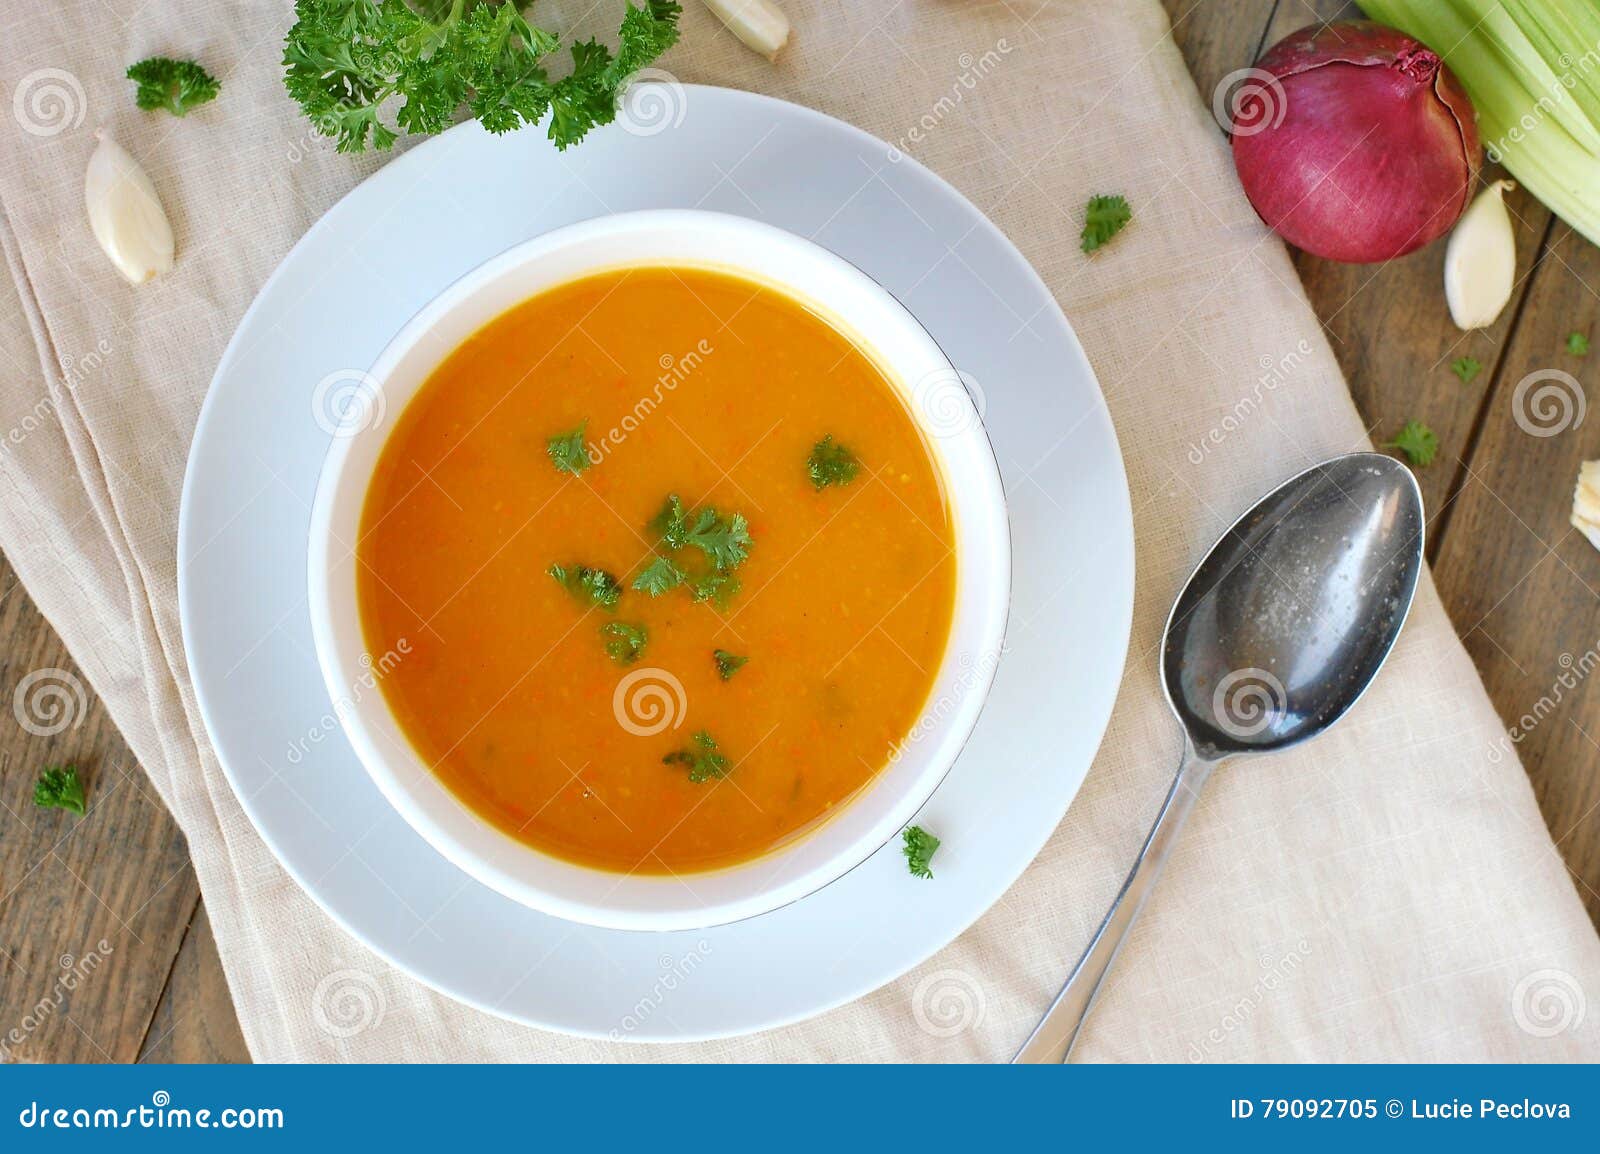 Healthy Orange Soup from Pumpkin Hokaido, Green Celery, Garlic, Onion ...